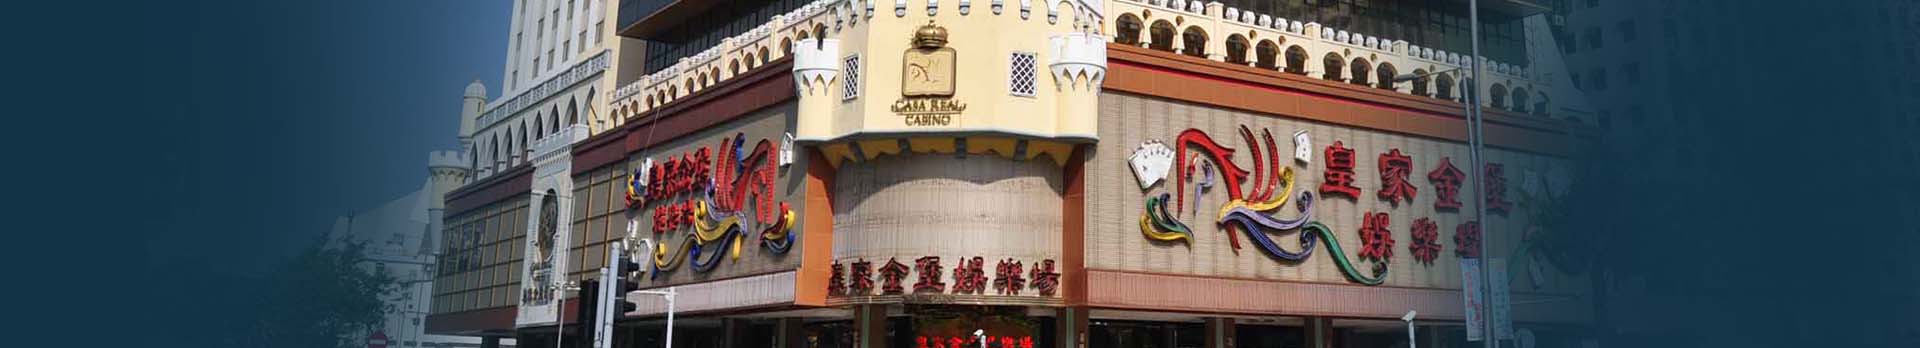 Casa Real Casino Macau